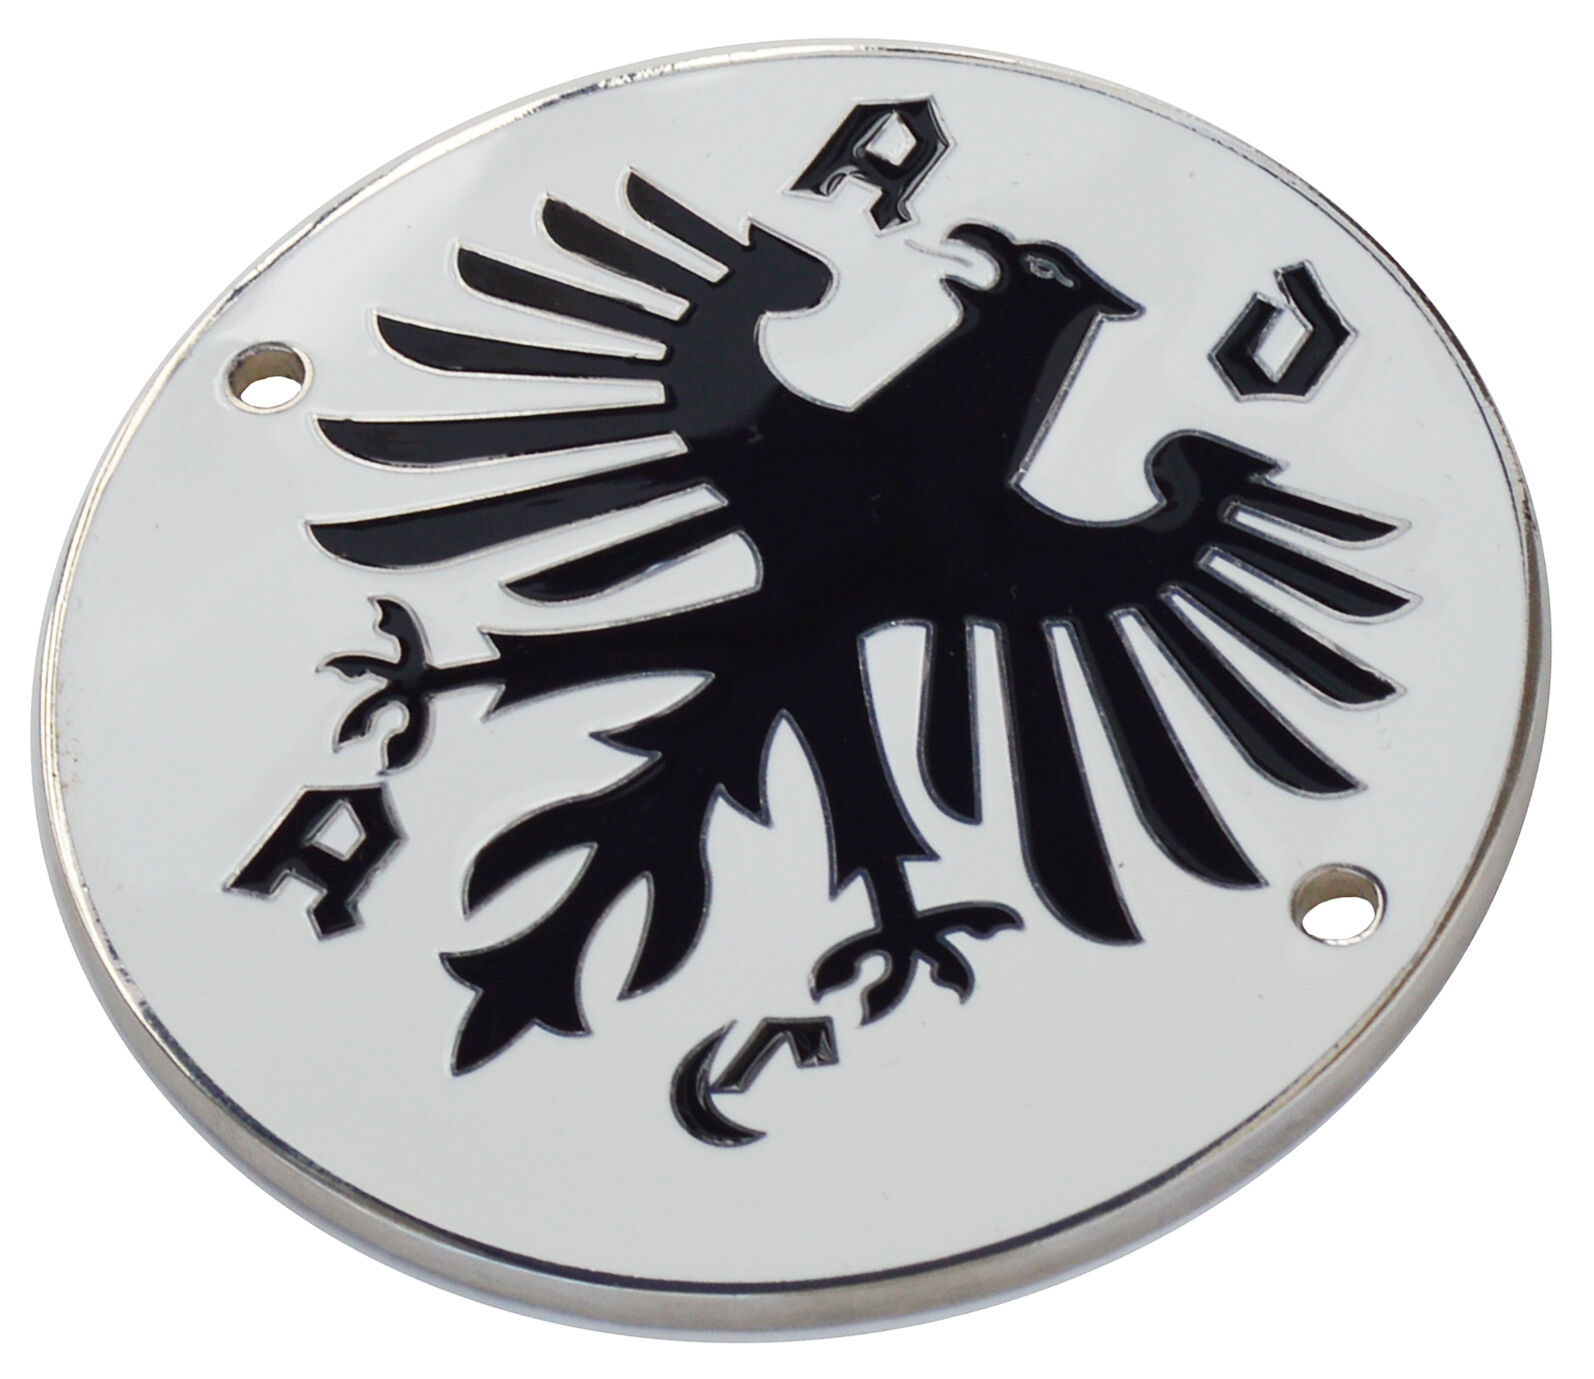 ADAC Club Deutschland car grille badge 3-1/2 inch dia.